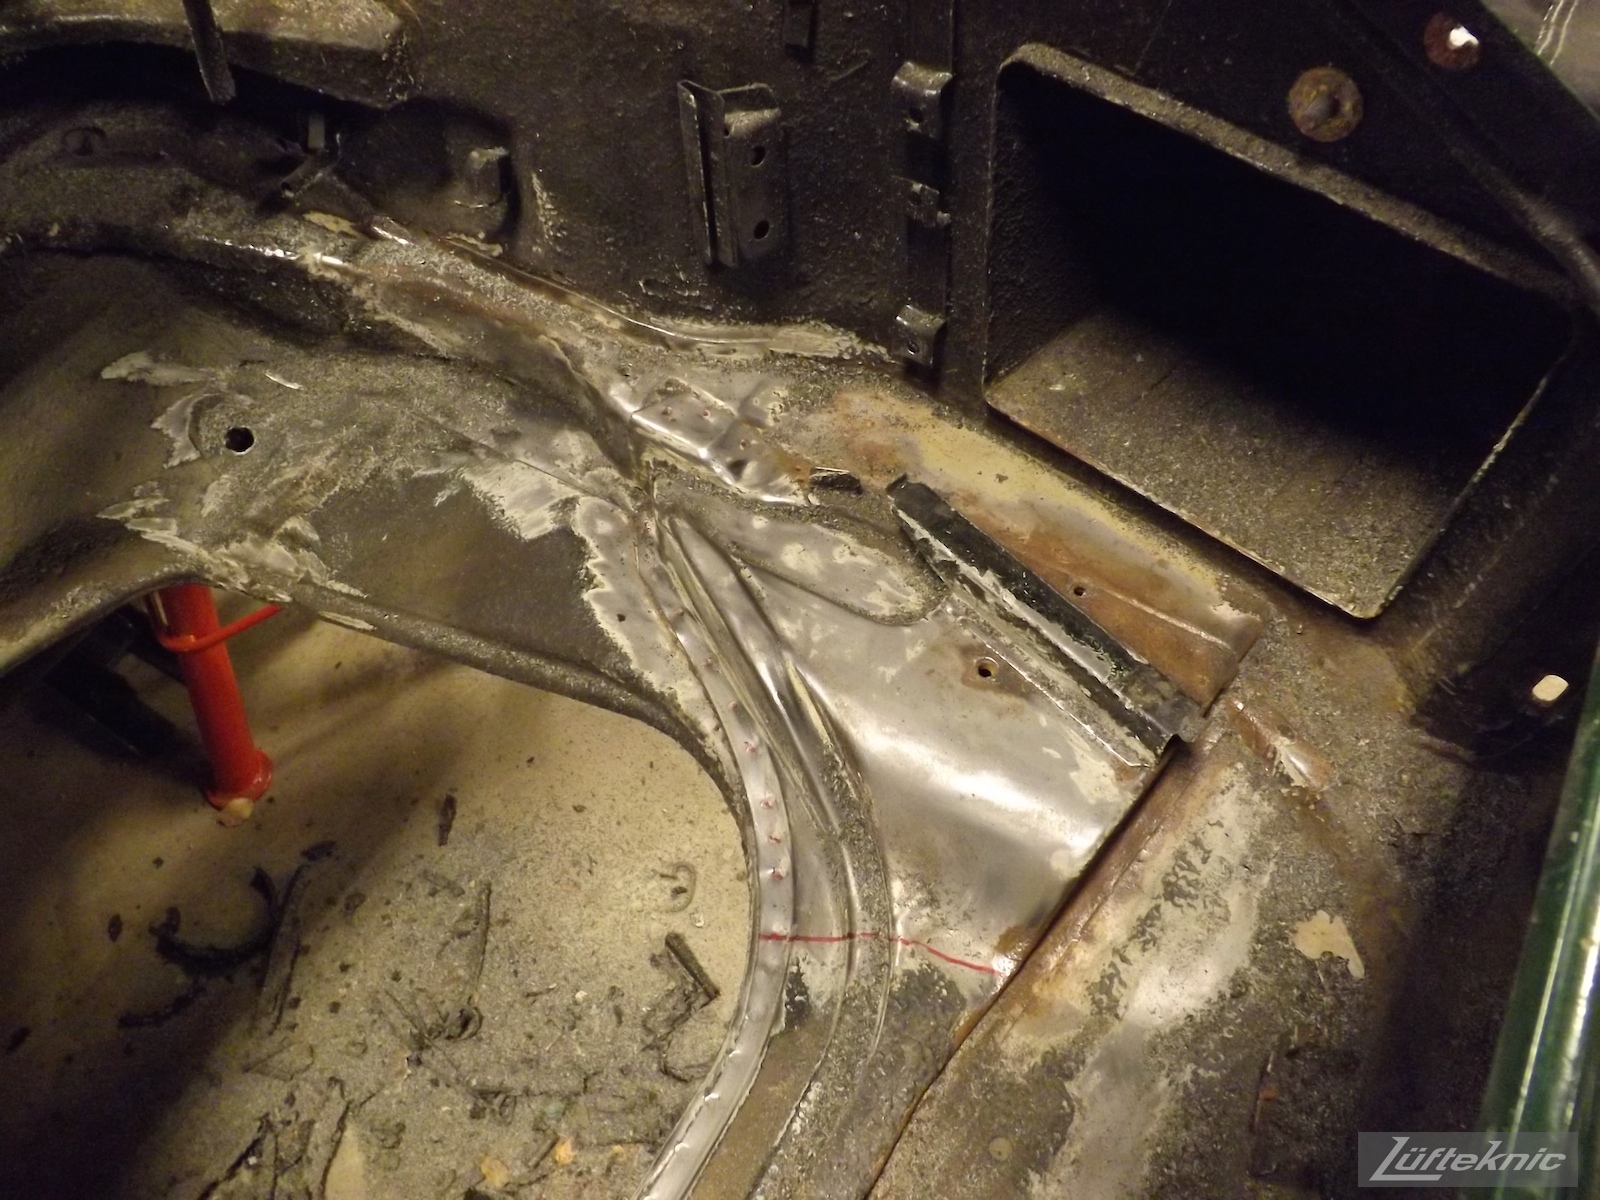 Front pan repair from battery acid and rust damage on an Irish Green Porsche 912 undergoing restoration at Lufteknic.